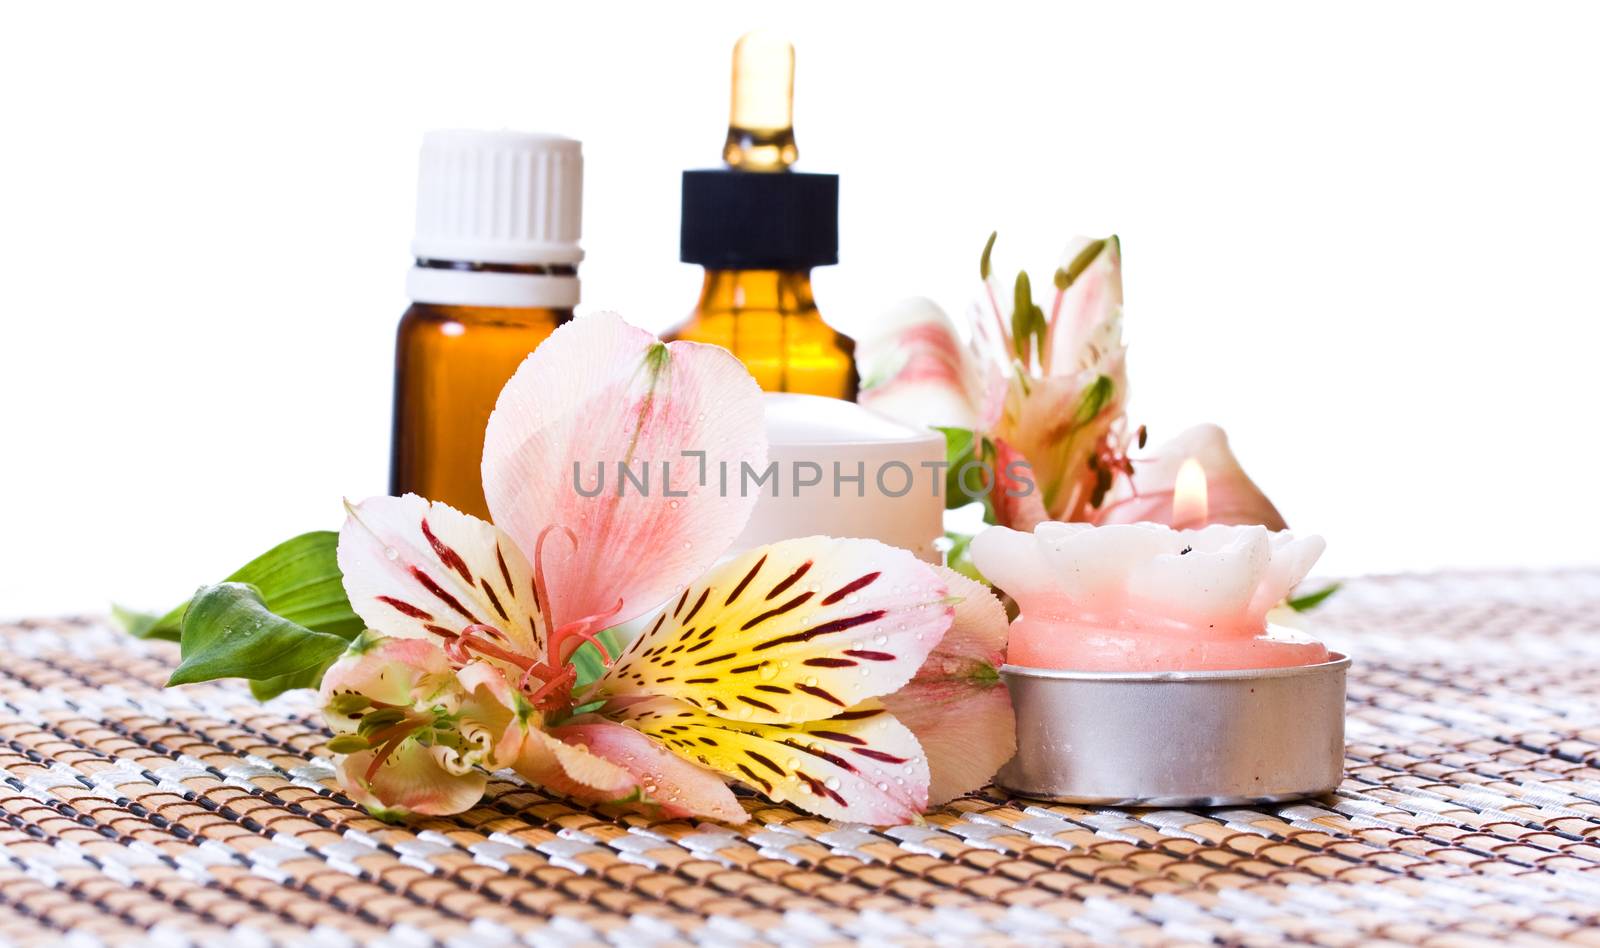 Beauty treatment - alstroemeria flowers and cosmetics